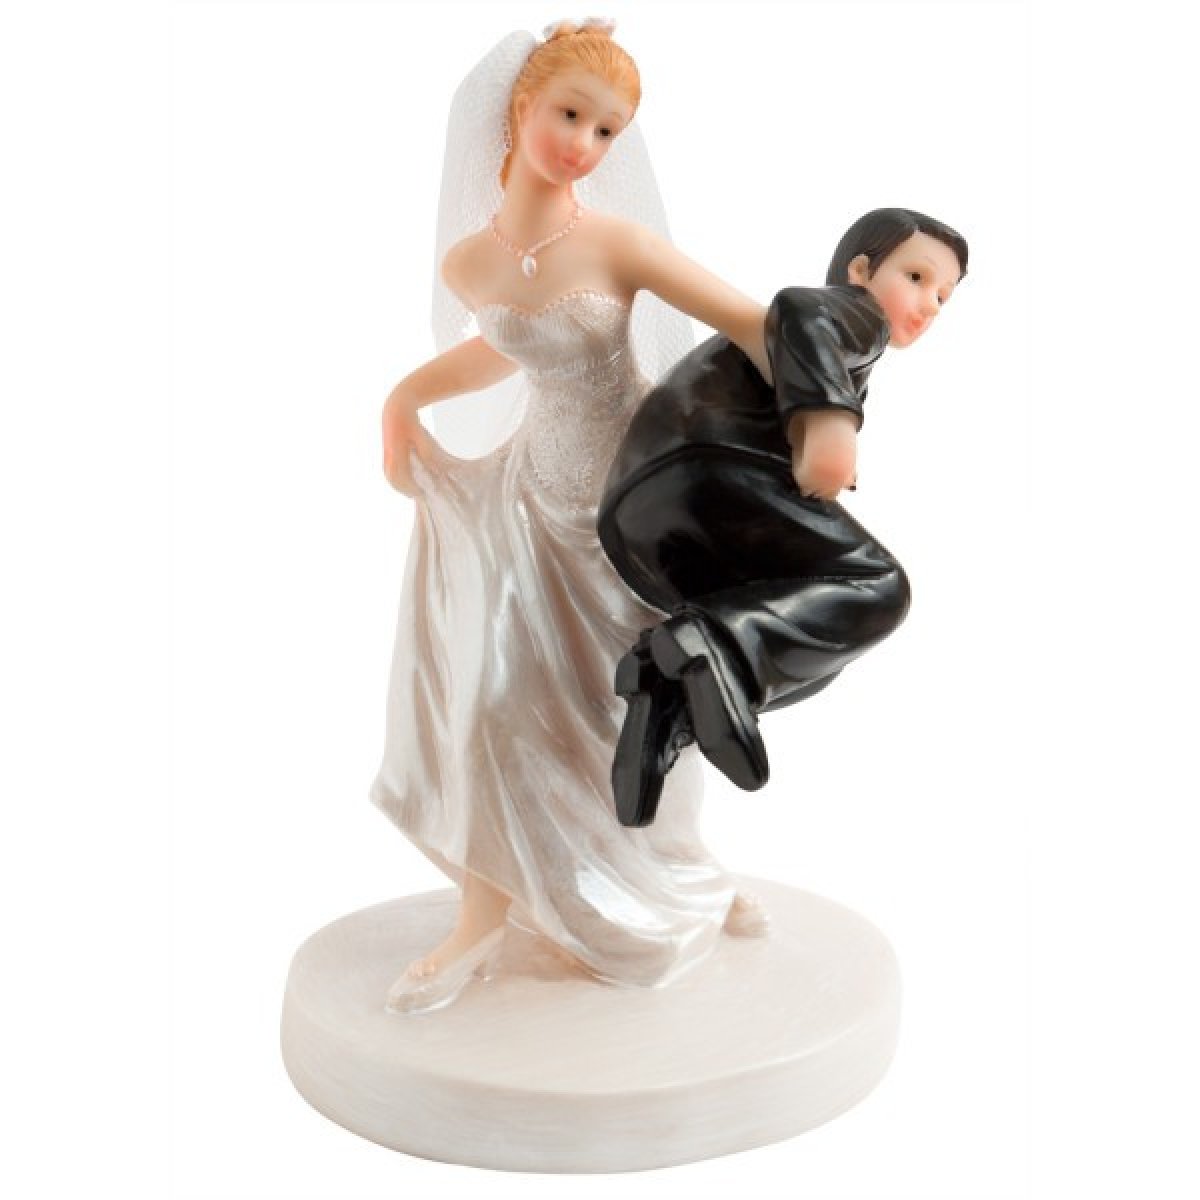 Figurine gateau mariage - Allez chéri on rentre